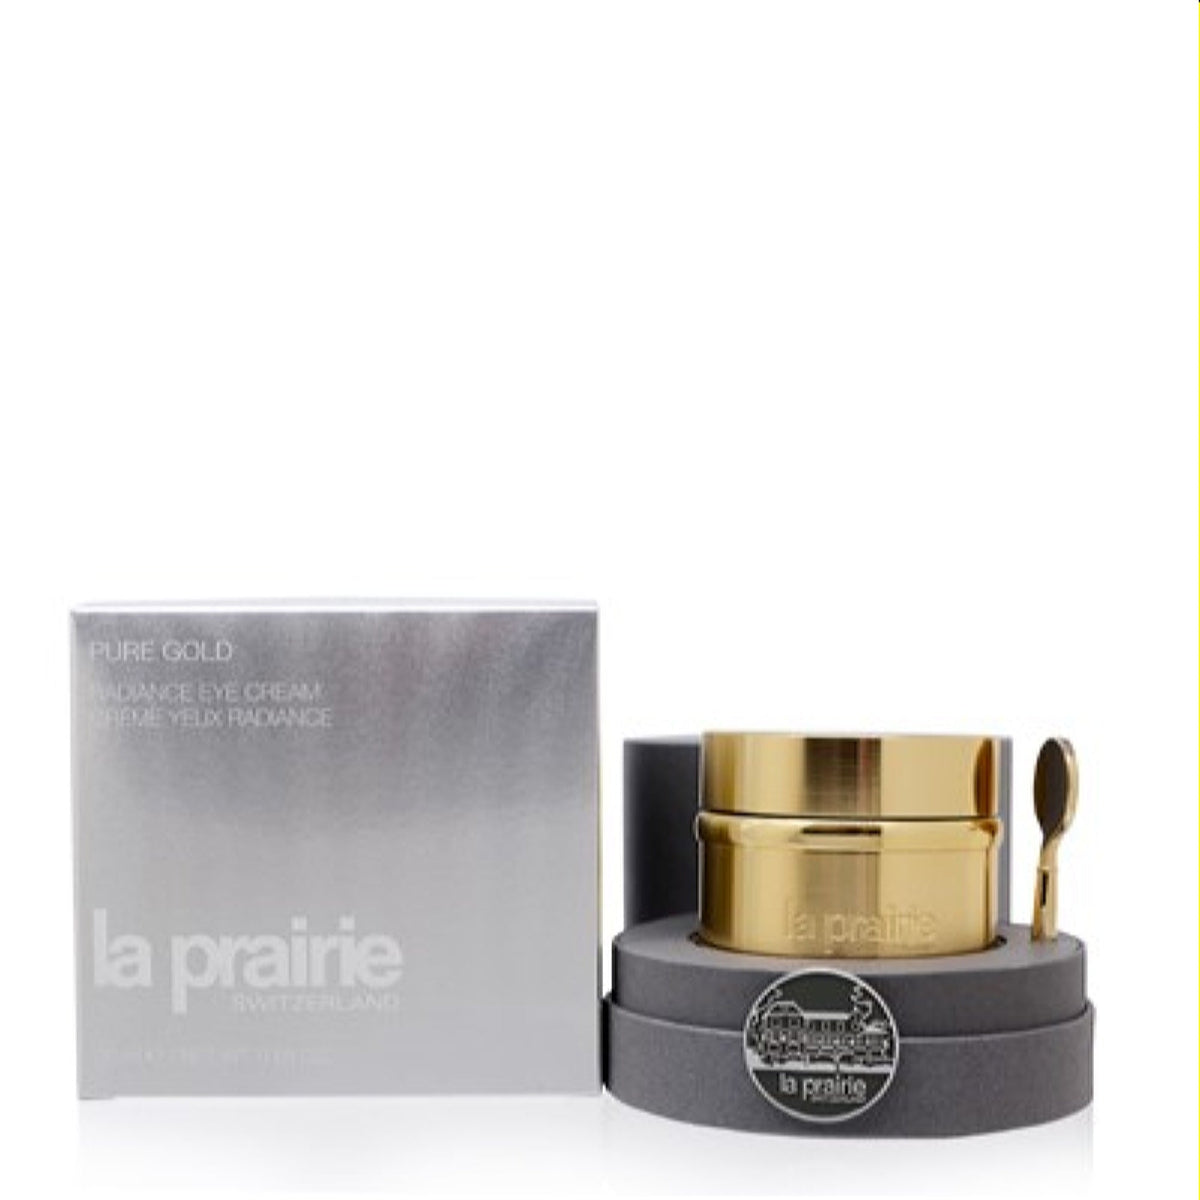 La Prairie Pure Gold Radiance Eye Cream 0.7 Oz  